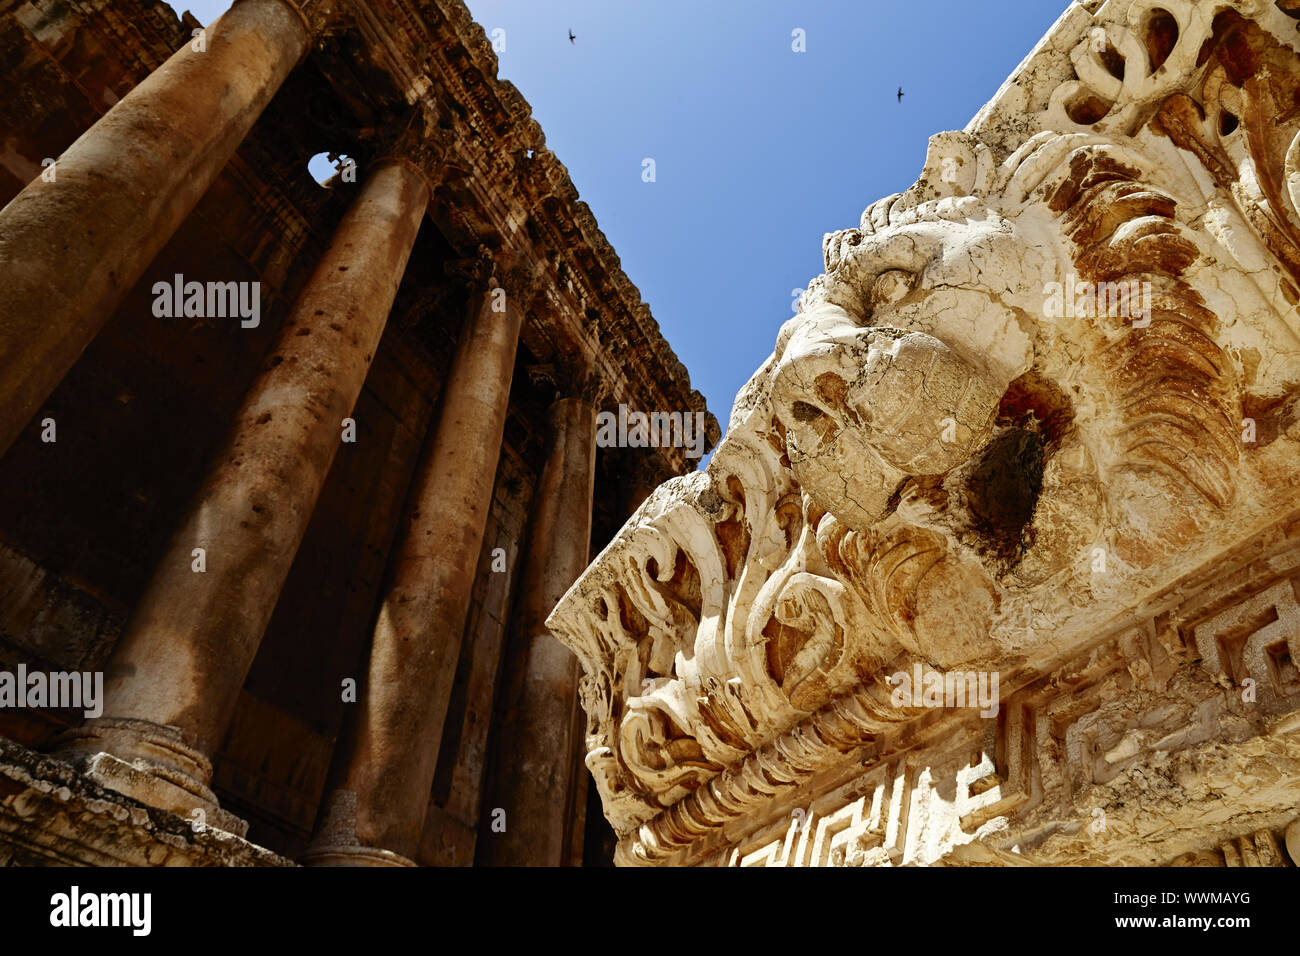 Bacchus Tempel (Tempel des Bacchus und der Löwe) - baalbek Baalbek, Libanon Stockfoto